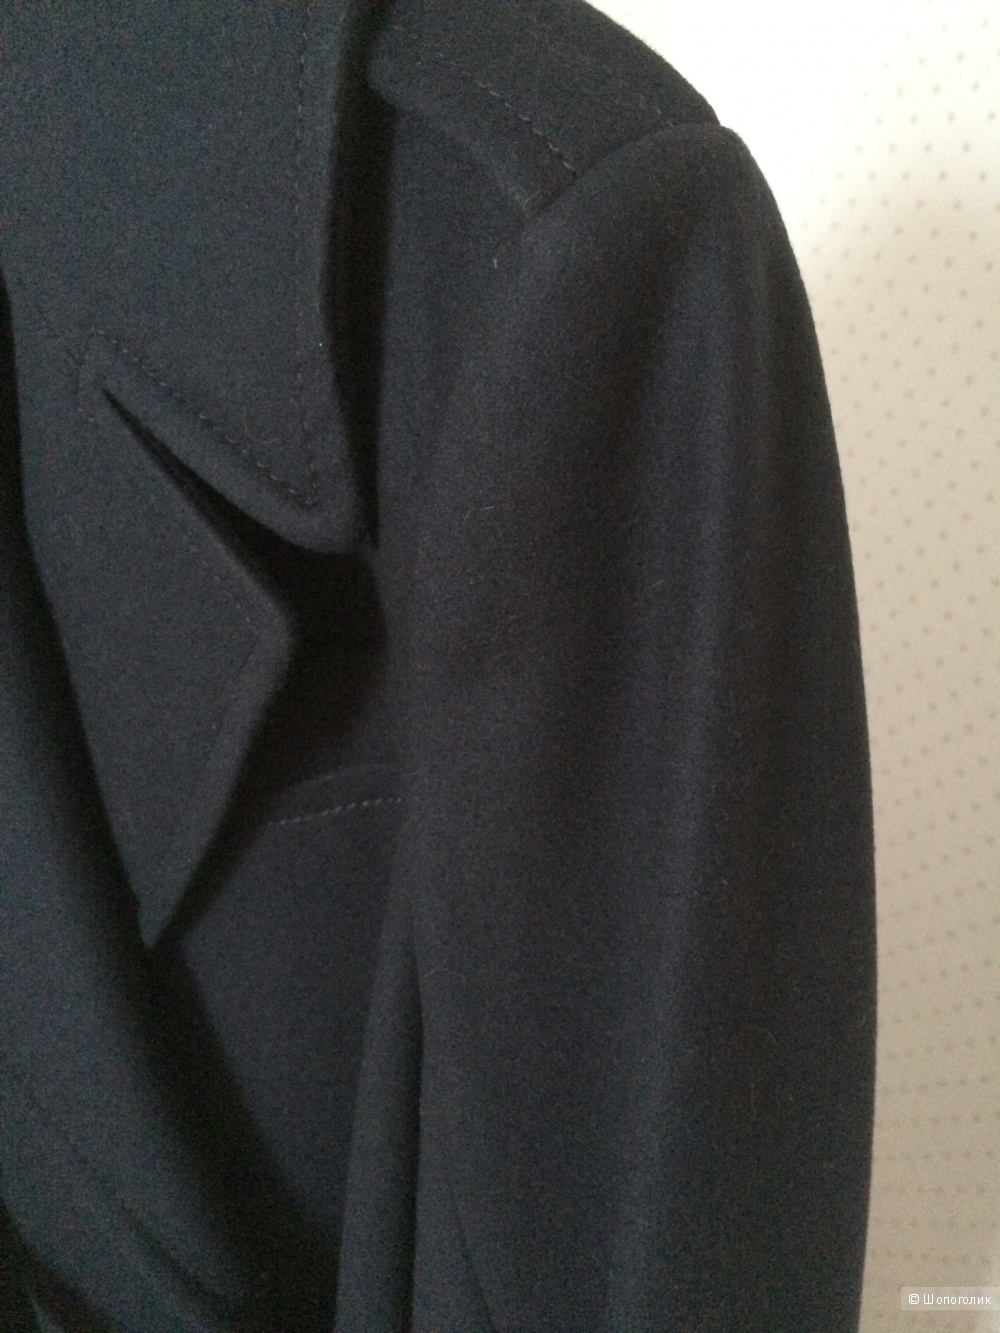 Новое шестяное пальто French Connection, росс. размер 44